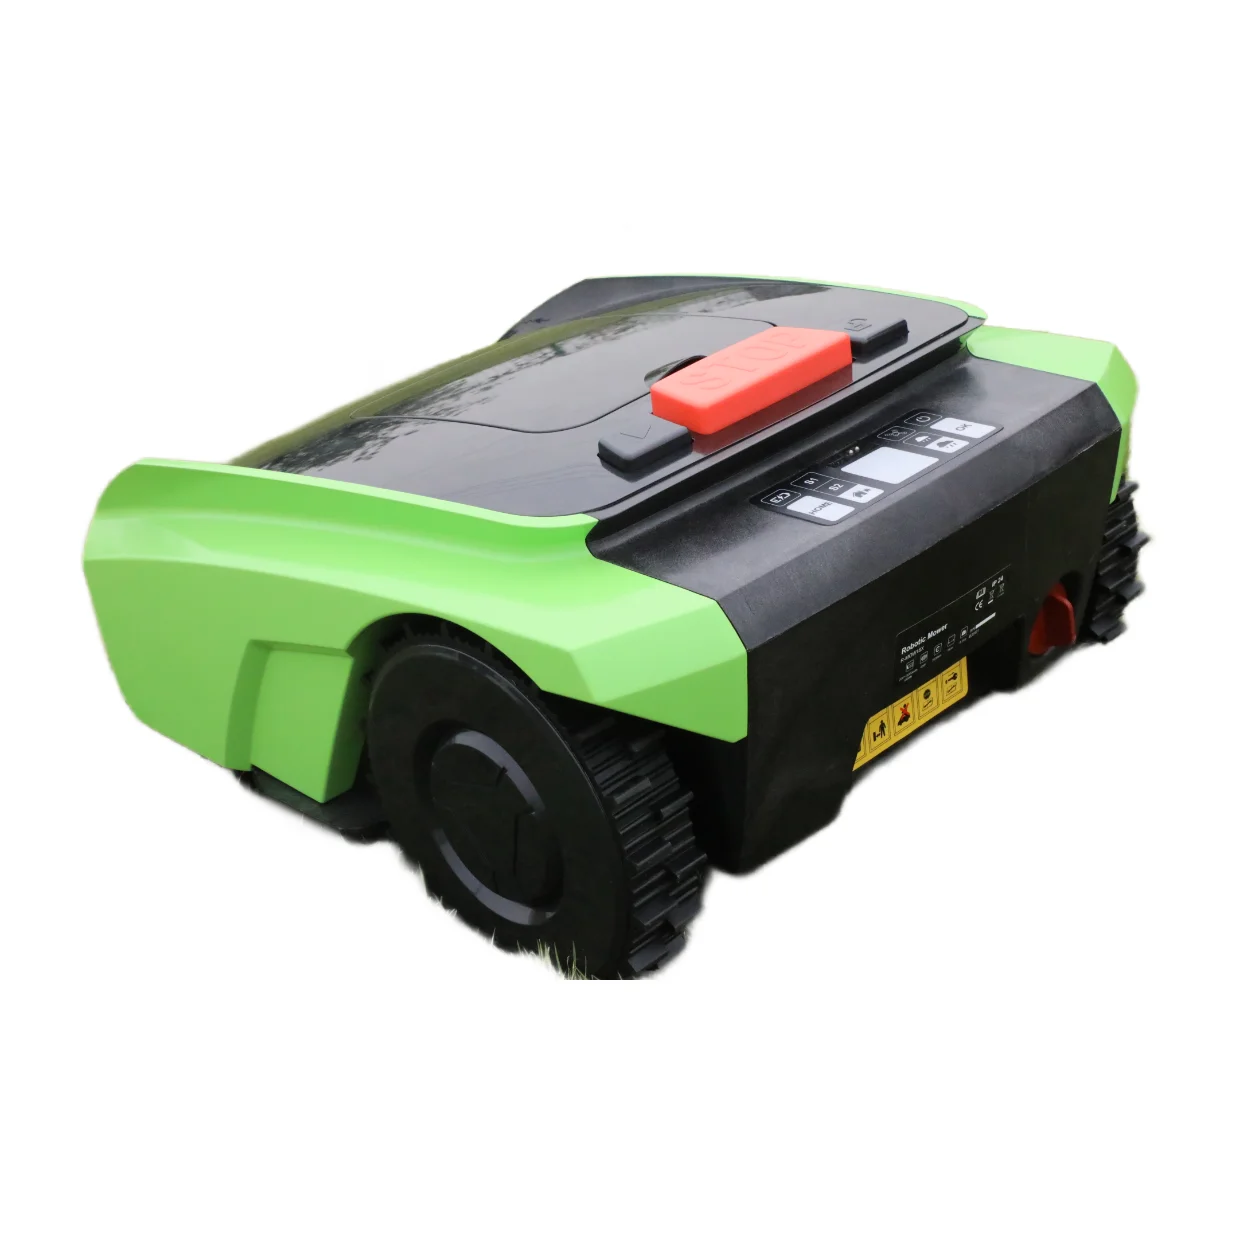 Rechargeable Lawn Mower Automatic Intelligent Robotic Mower Garden Grass Trimmer